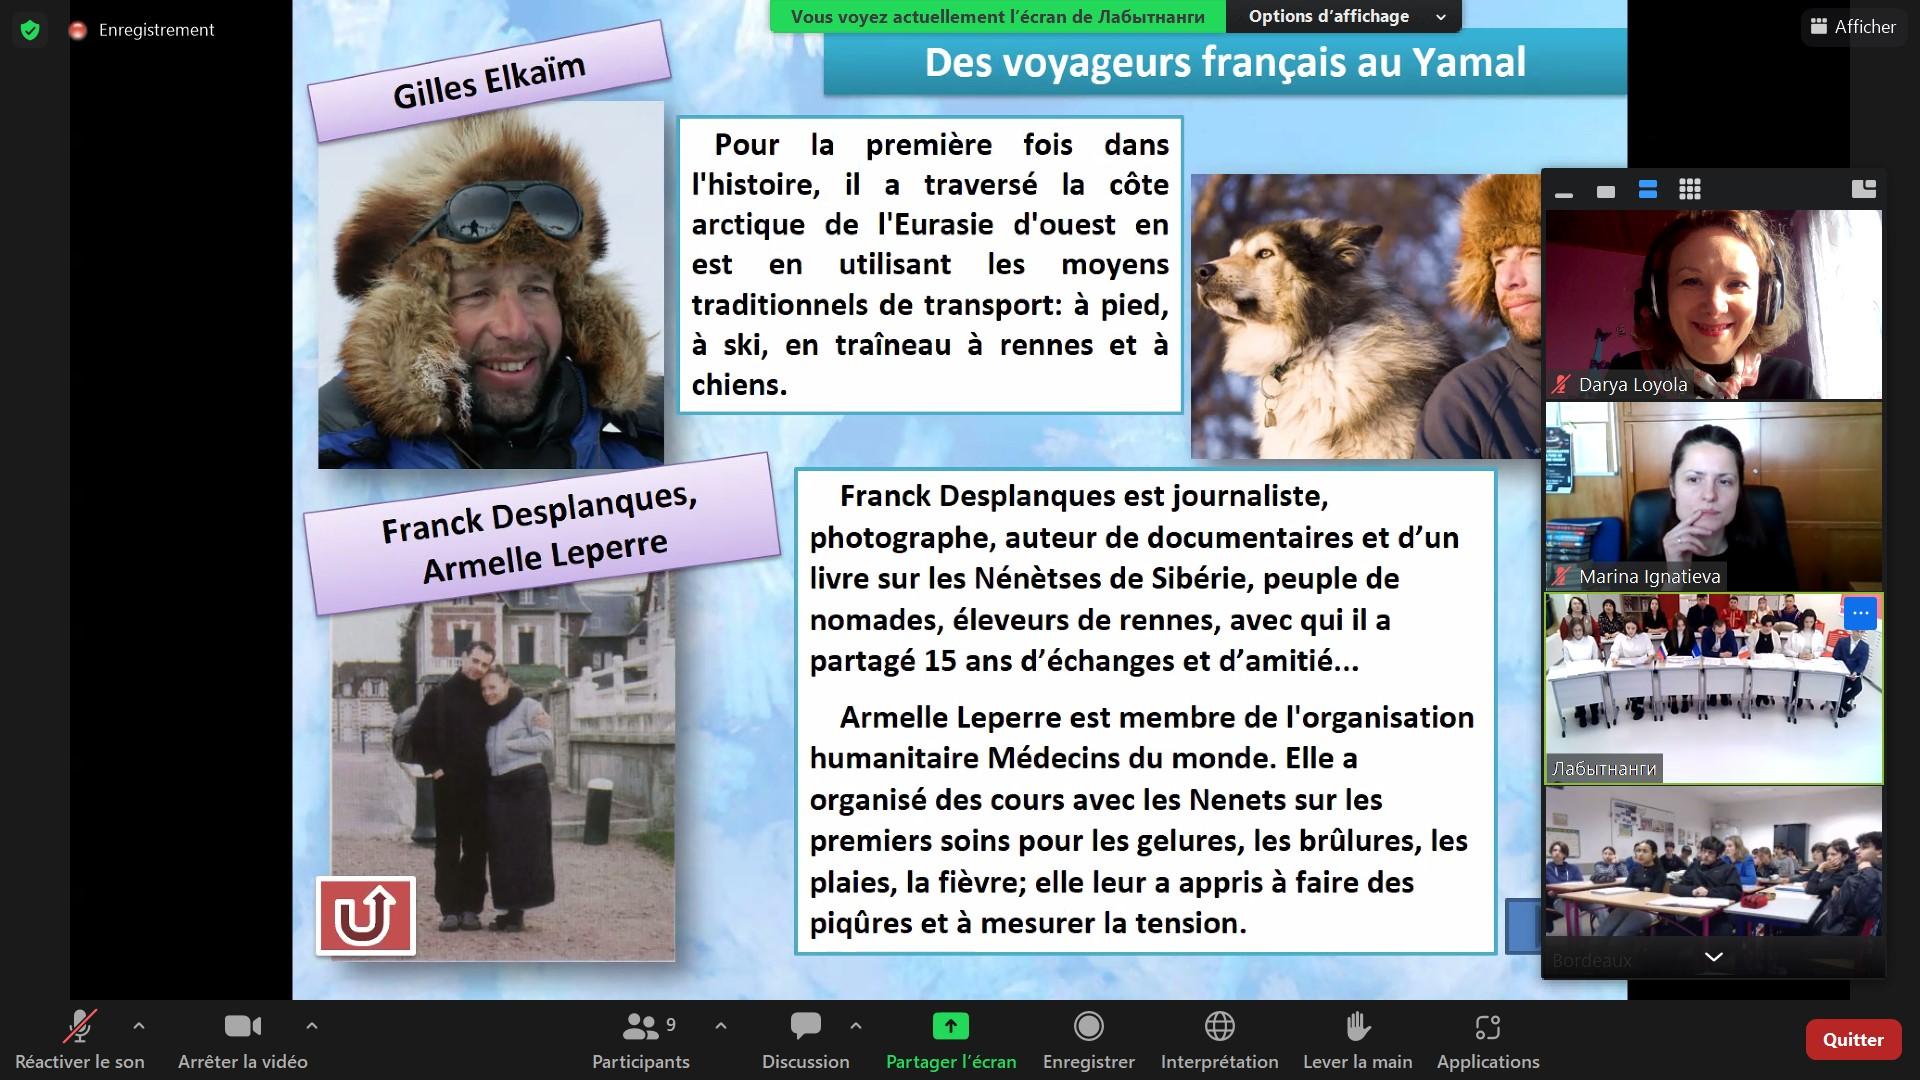 Voyageurs franc ais a yamal